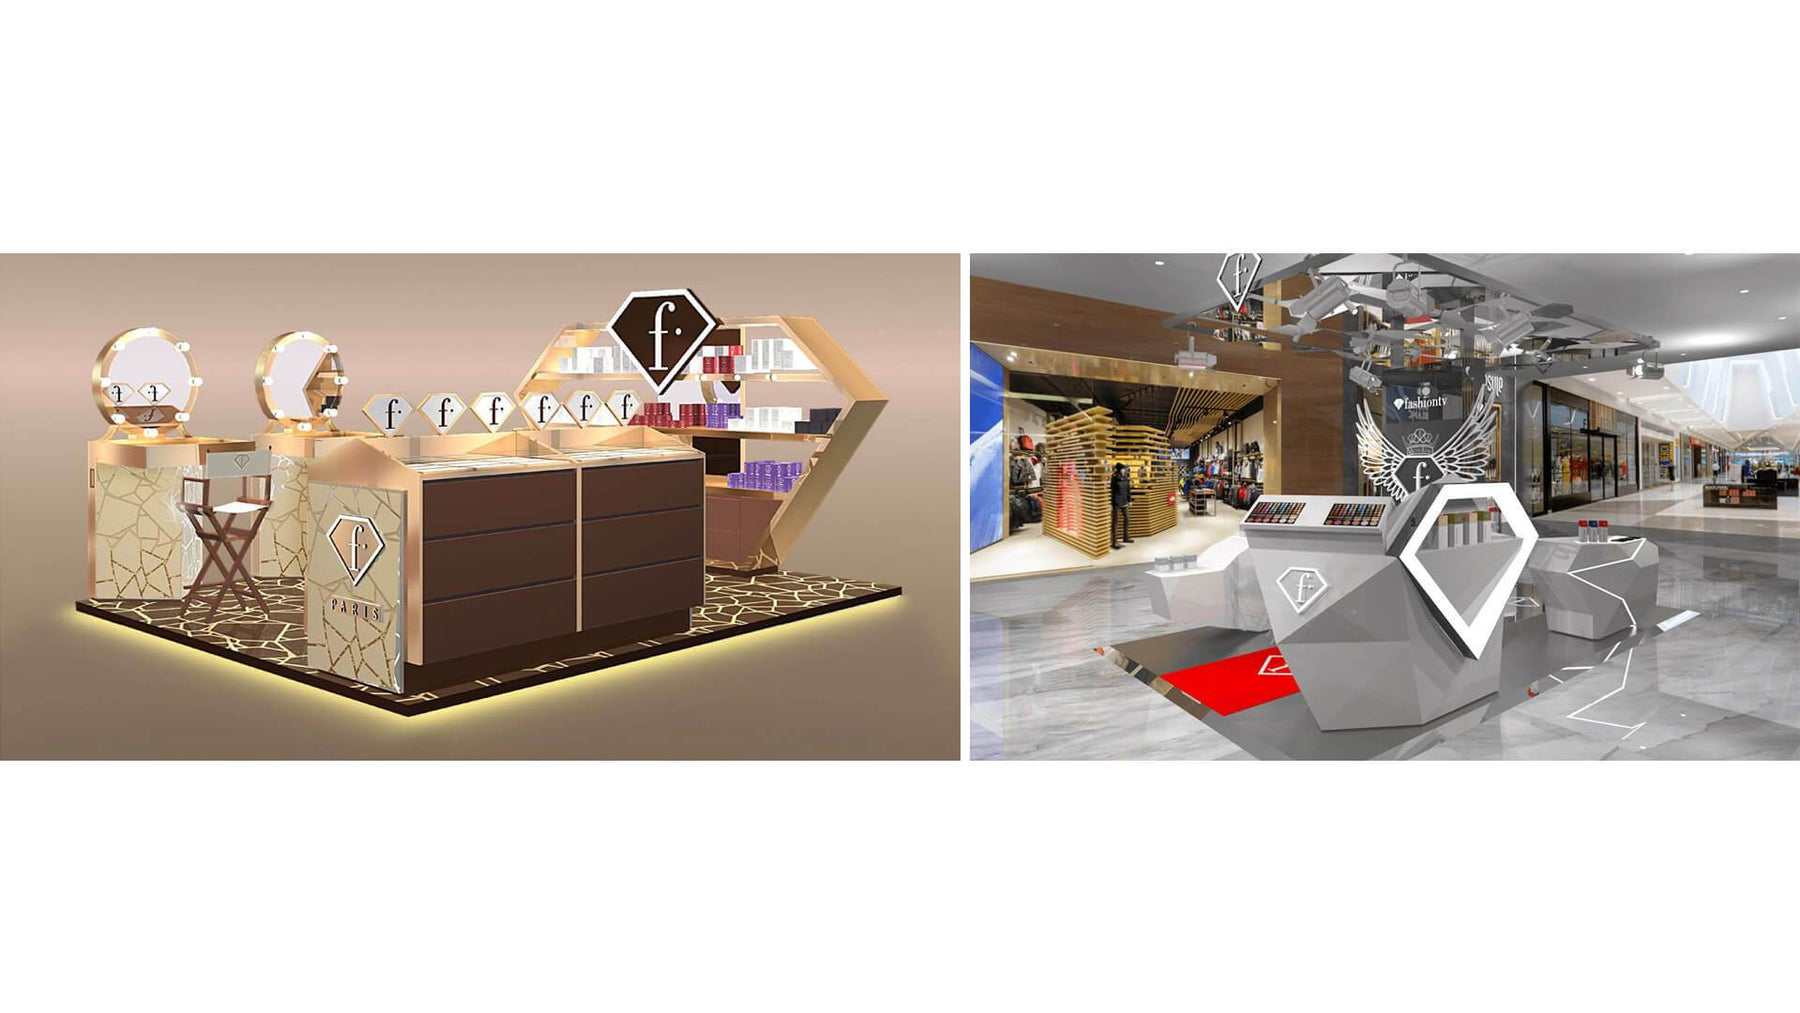 FTV gold polished stainless steel make up kiosk design - M2 Retail